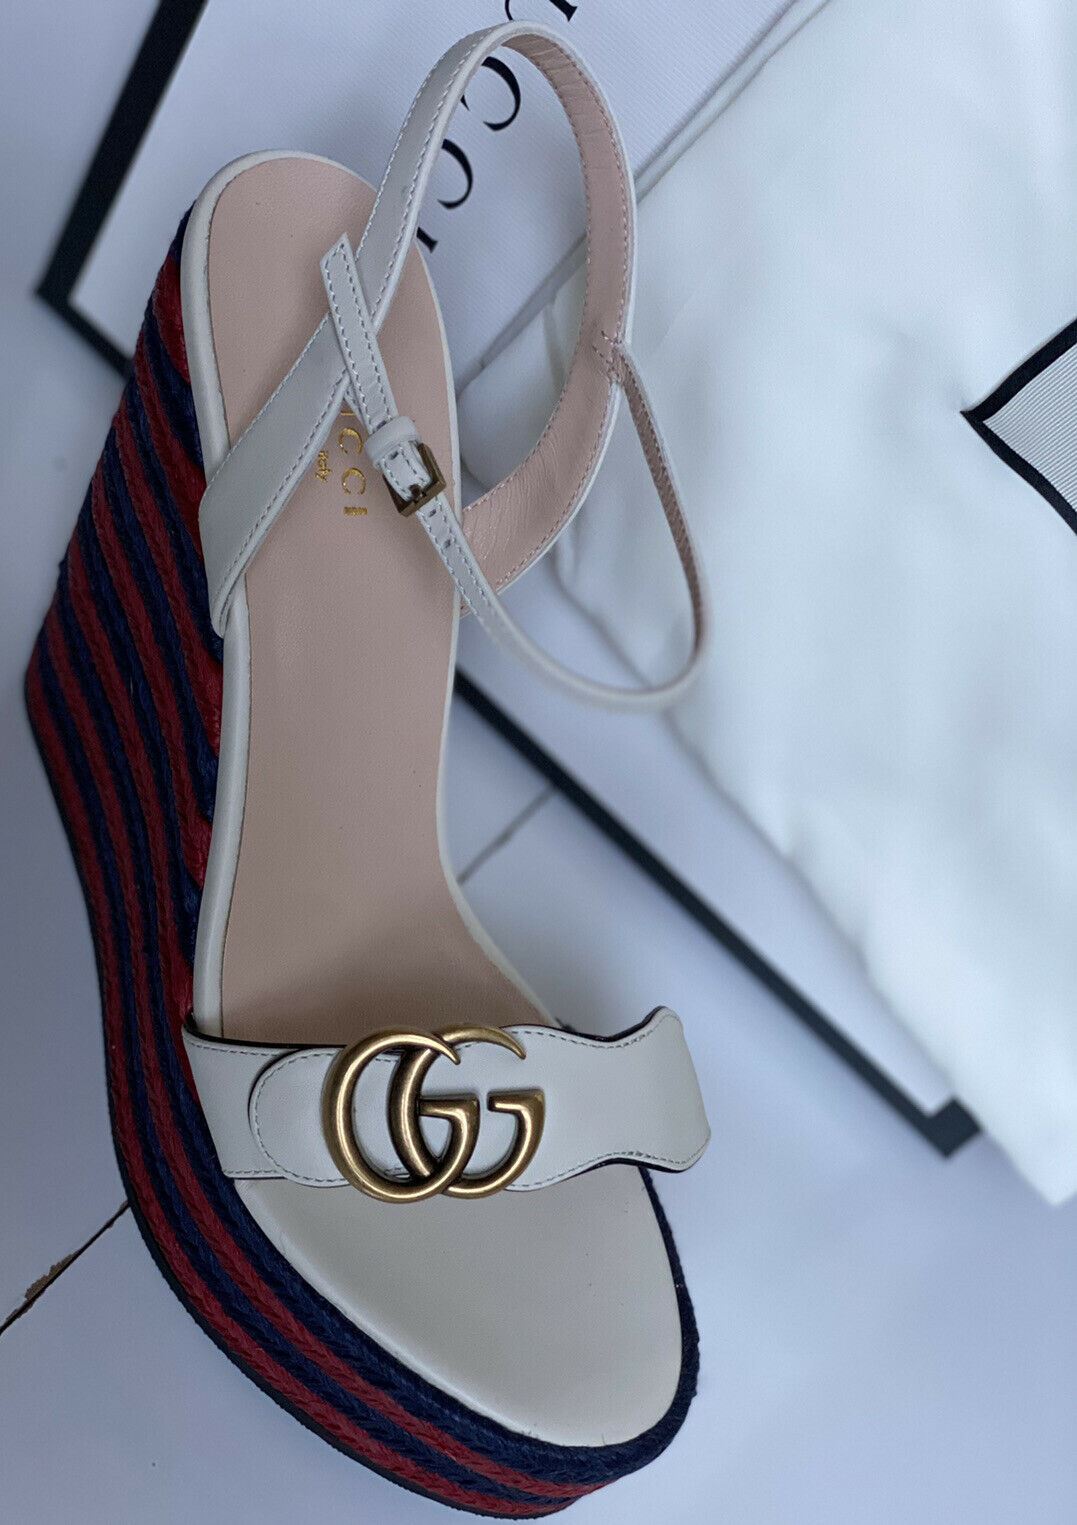 Женские сандалии NIB Gucci на платформе, эспадрильи Mystic, белые сандалии 10 США (40 ЕС) 624314 